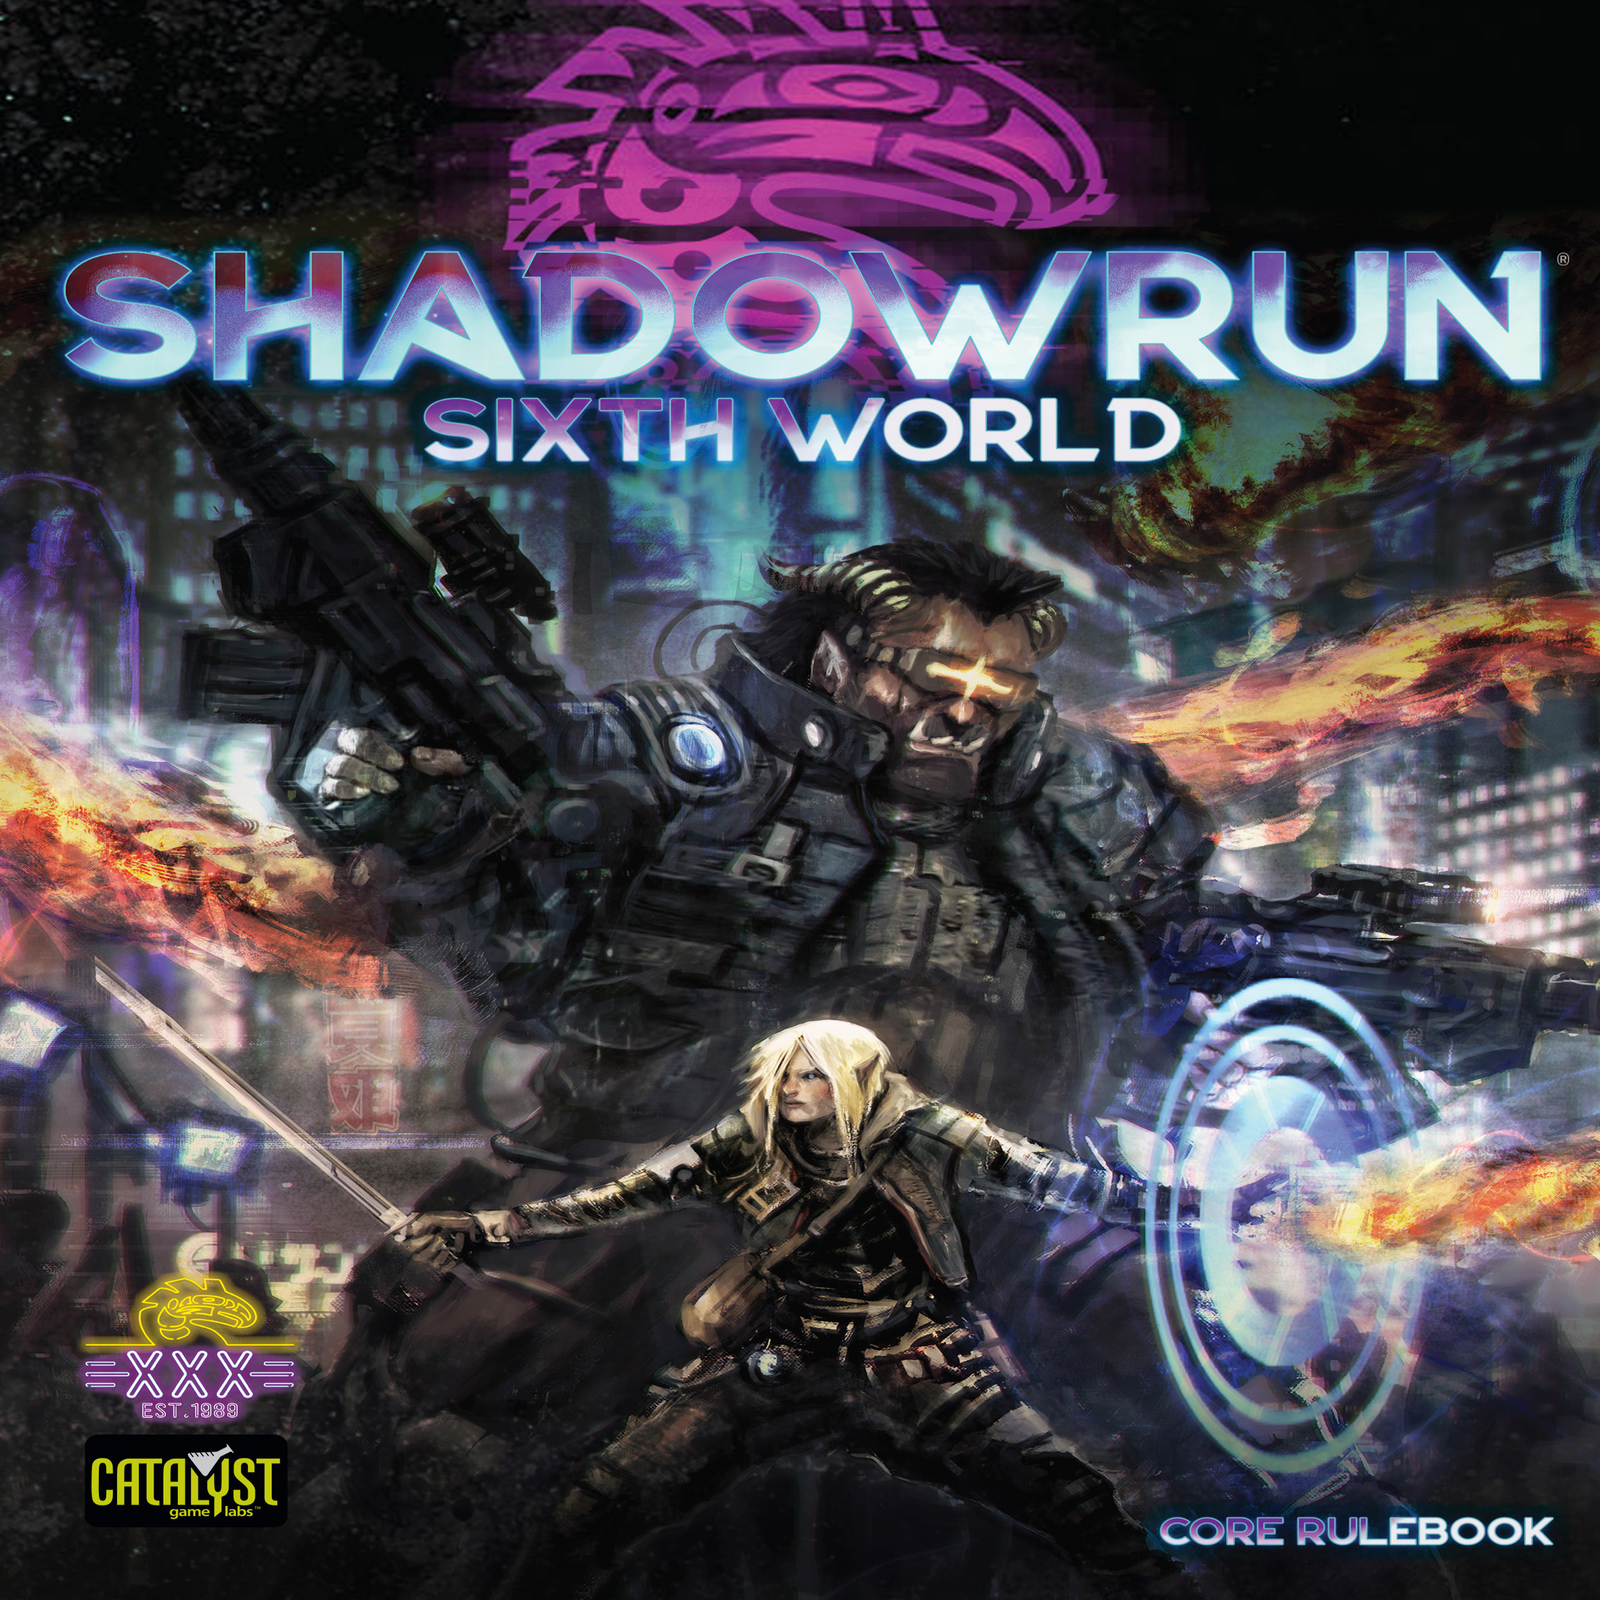 Shadowrun Sixth World: Core Rulebook (6th ed. core book)